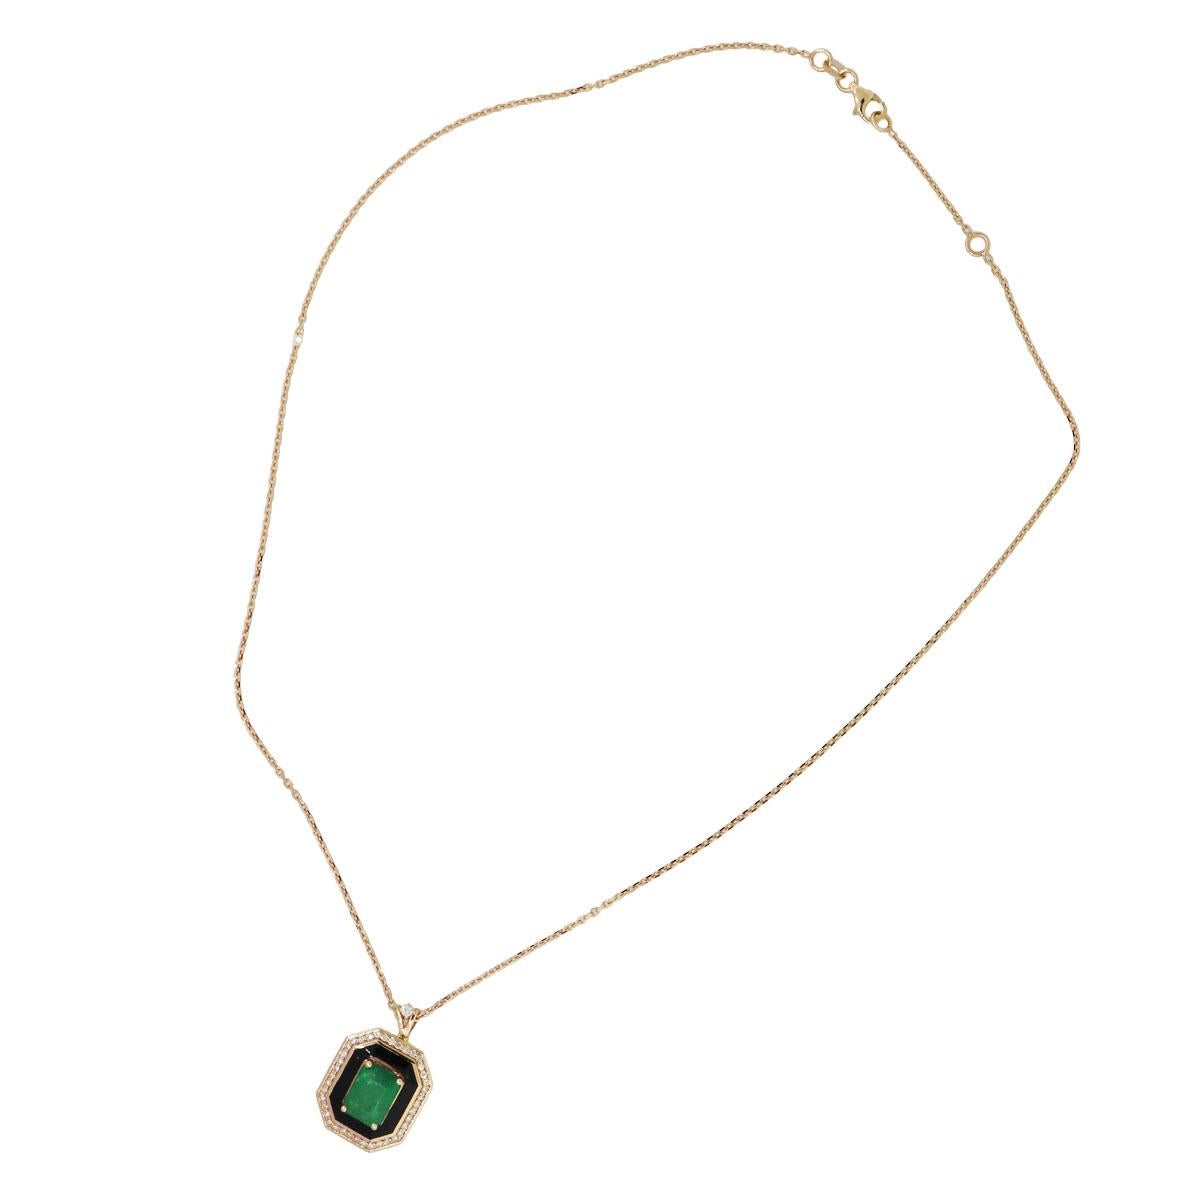 Round Cut 1.95 Carat Emerald and Diamond Black Enamel Pendant Necklace